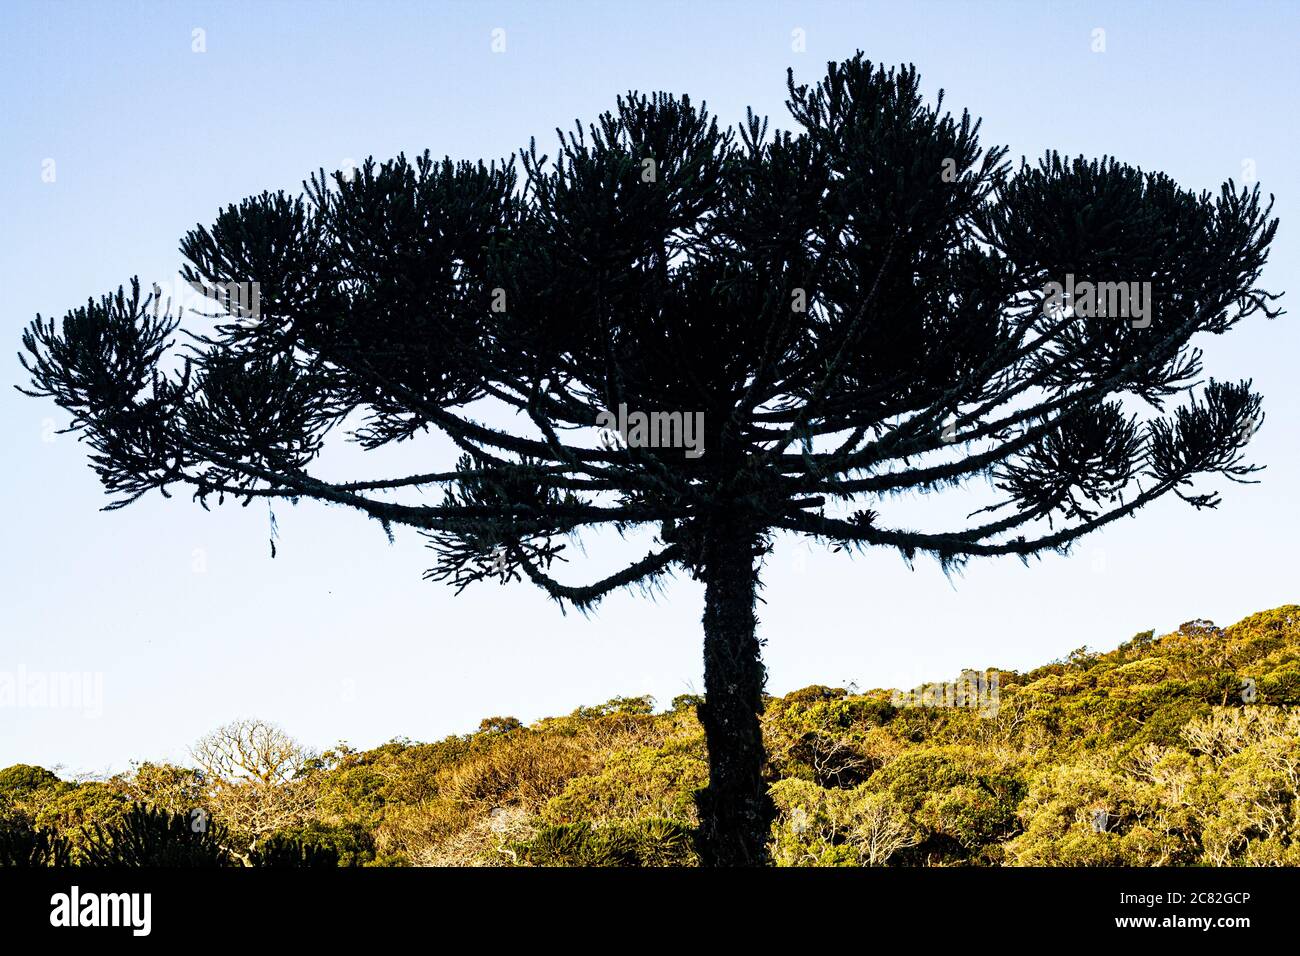 Araucaria pine tree (Araucaria angustifolia). Rancho Queimado, Santa Catarina, Brazil. Stock Photo